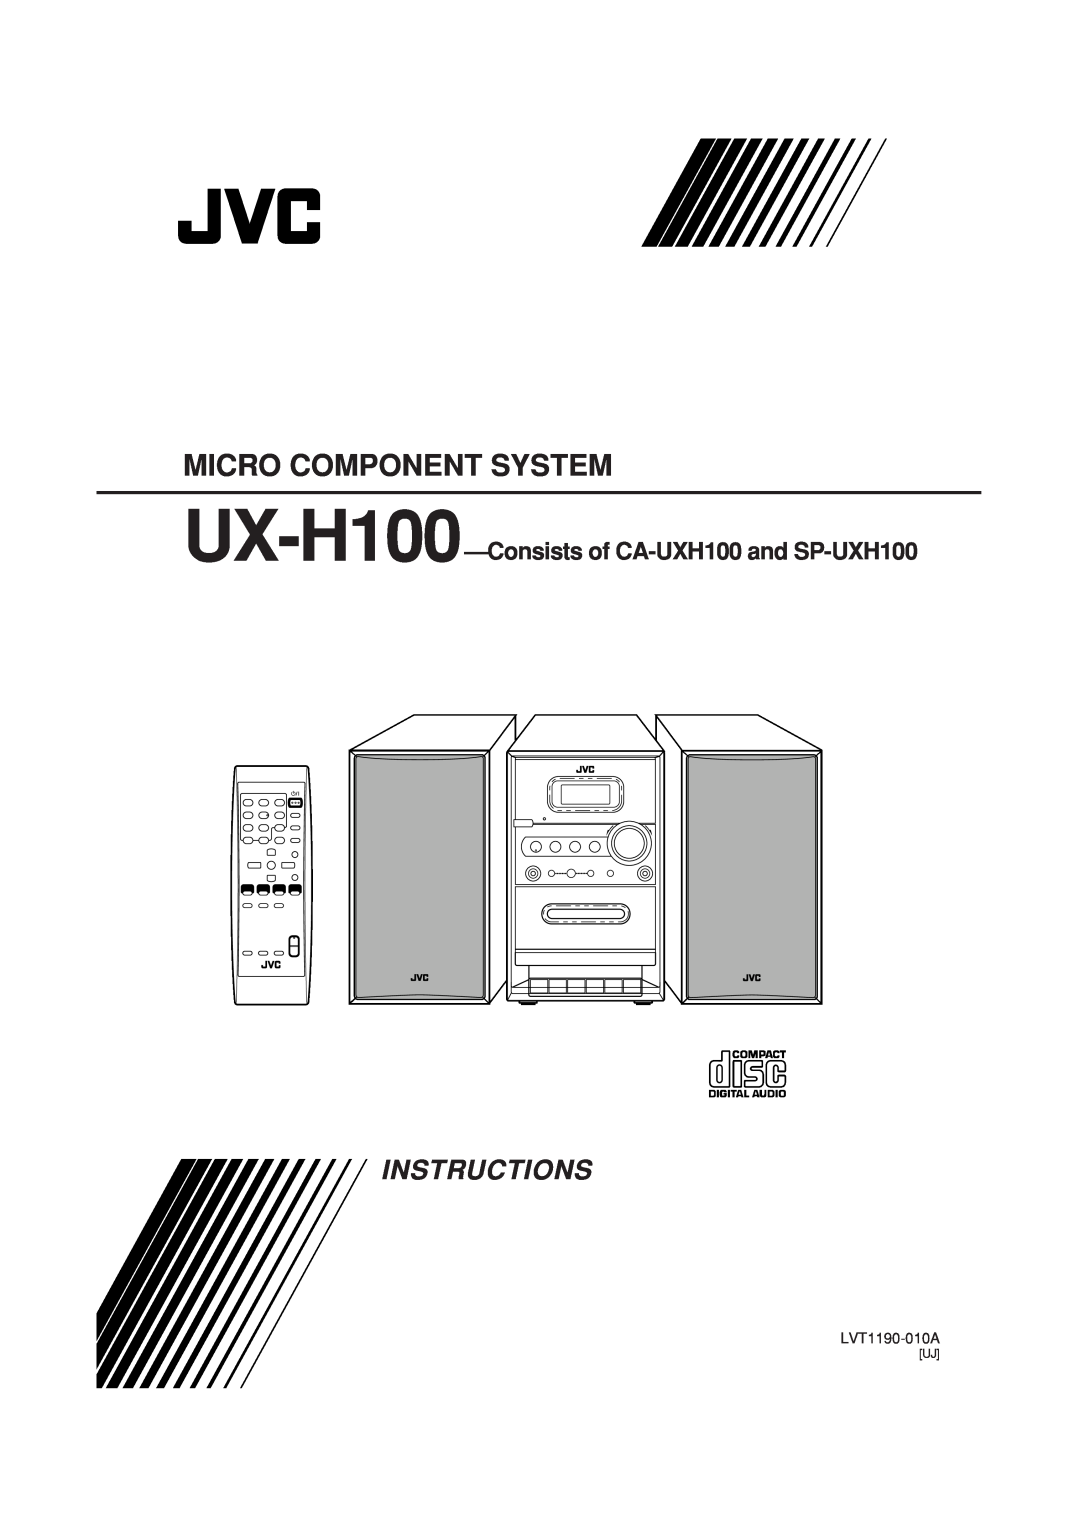 JVC SP-UXH100, UX-H100, CA-UXH100 manual Micro Component System, Instructions, LVT1190-010A 